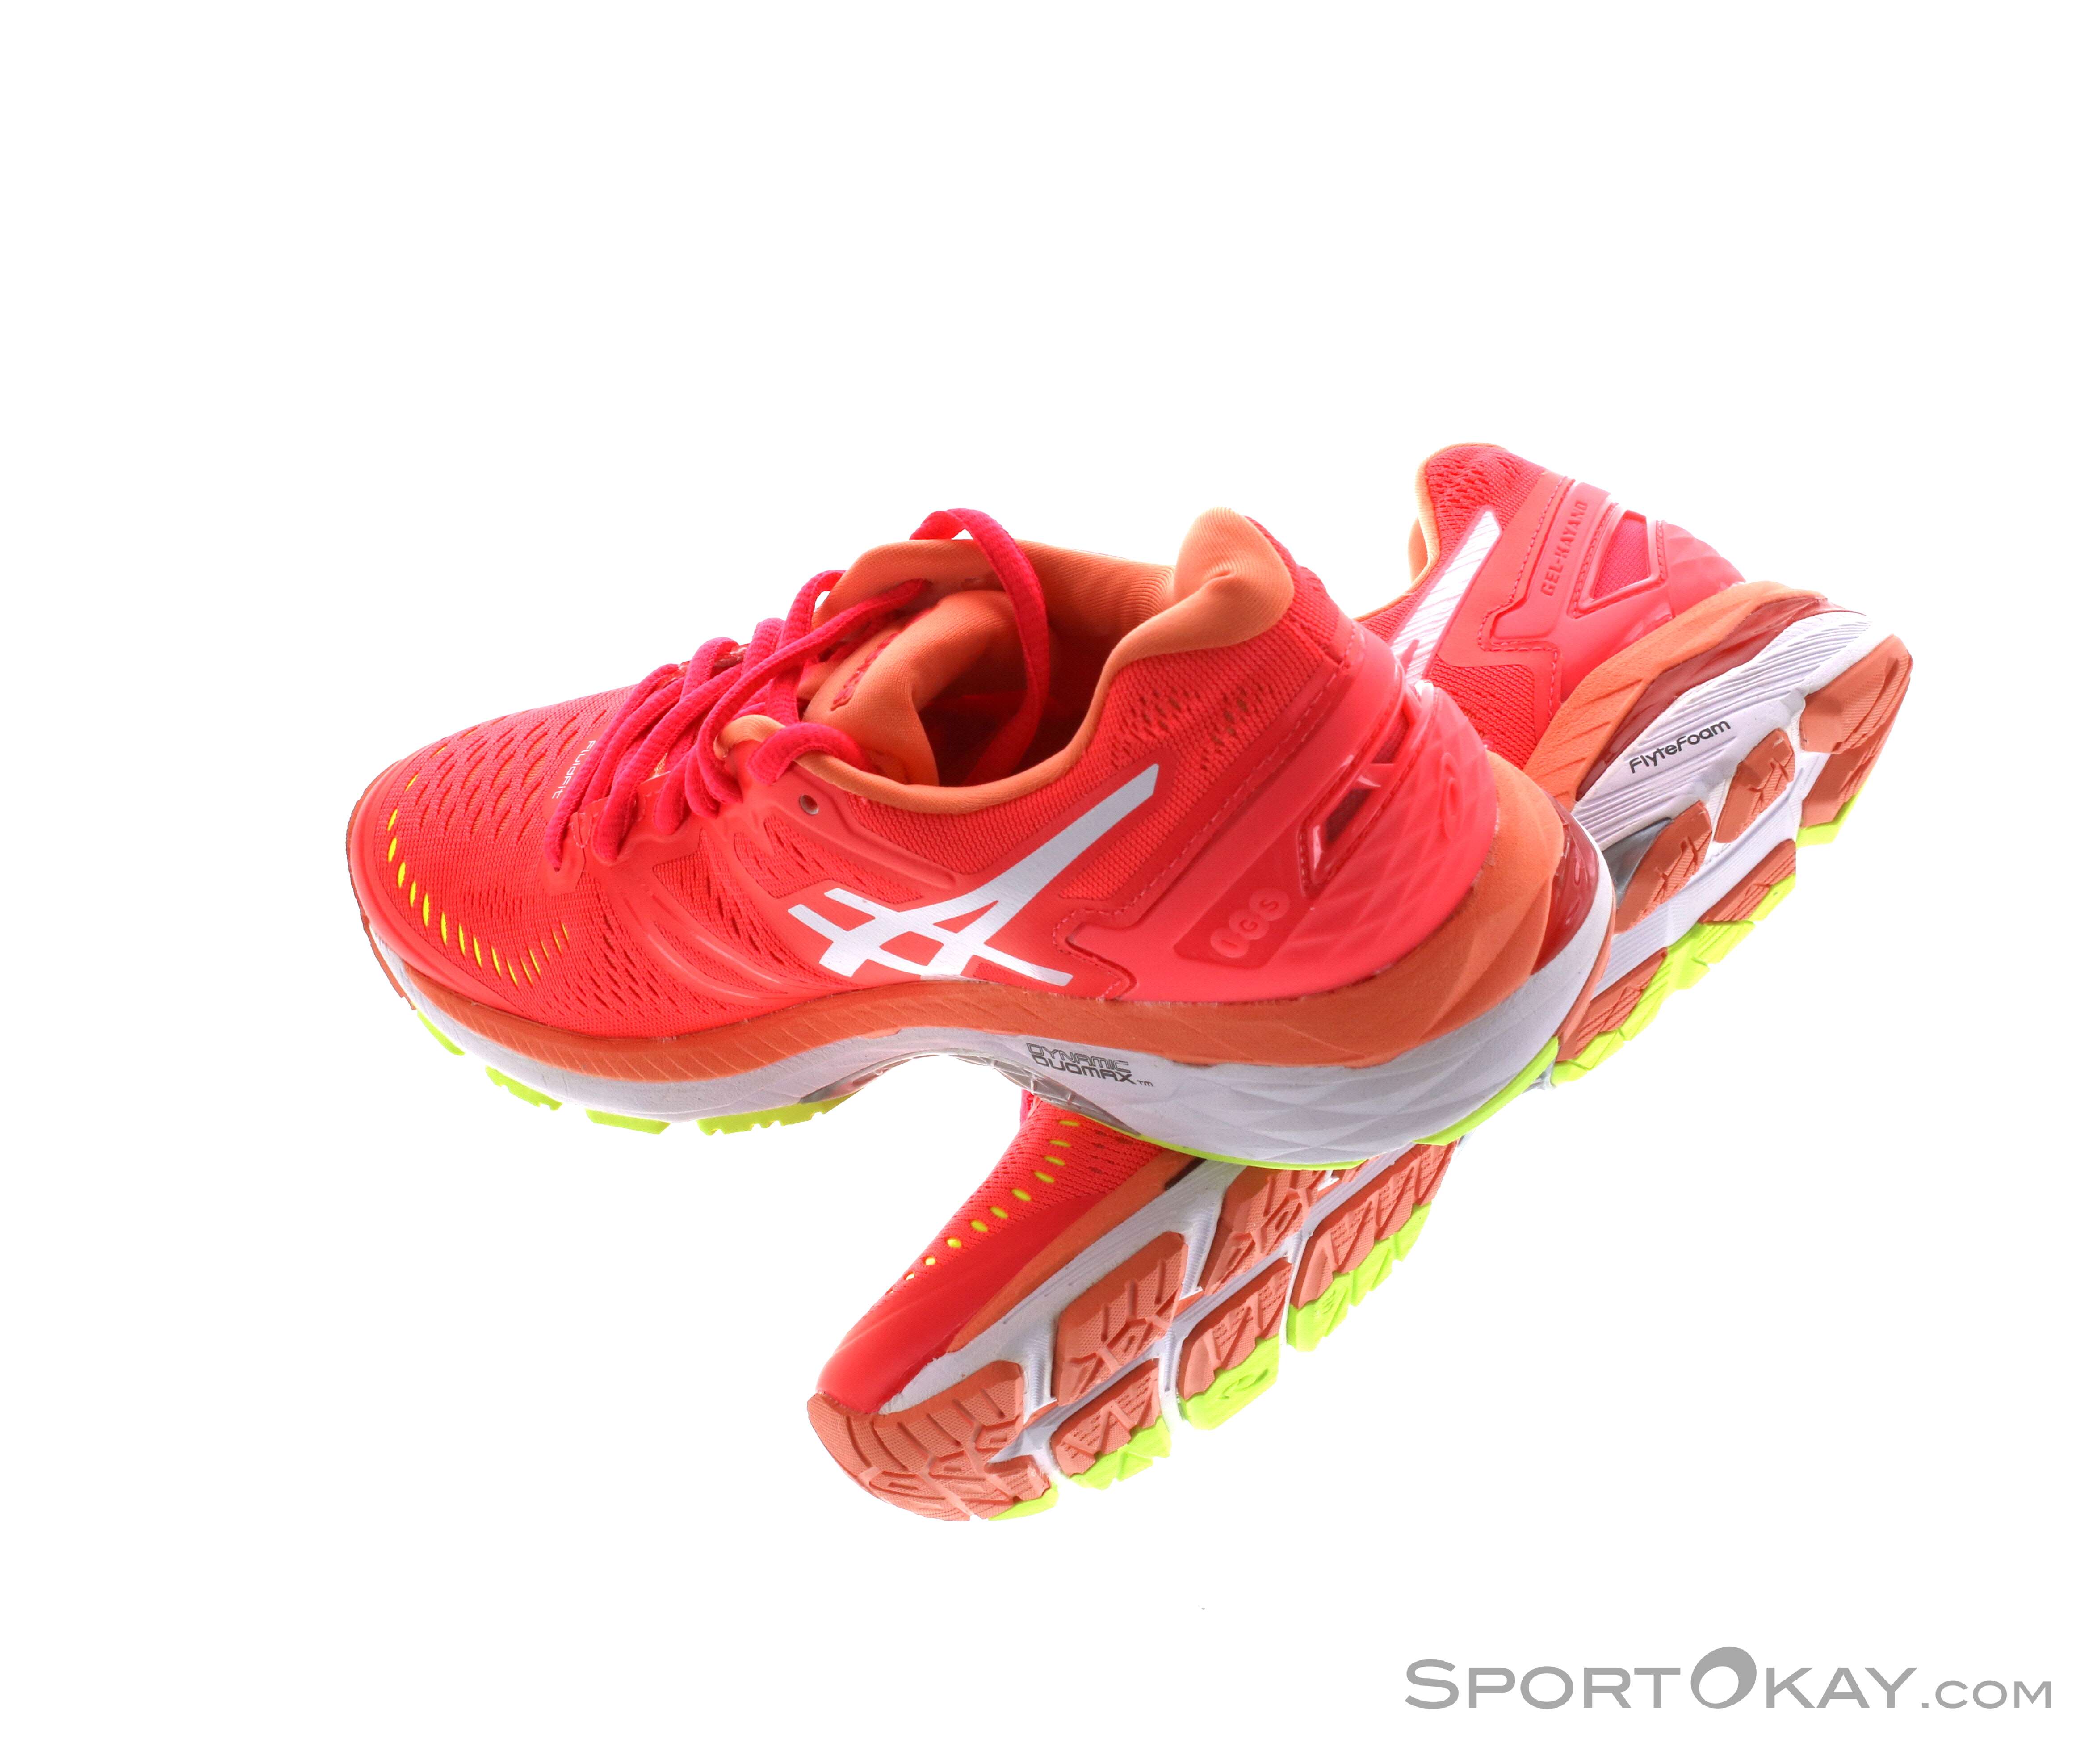 Asics Gel 23 Running Shoes - Shoes - Running - Running - All